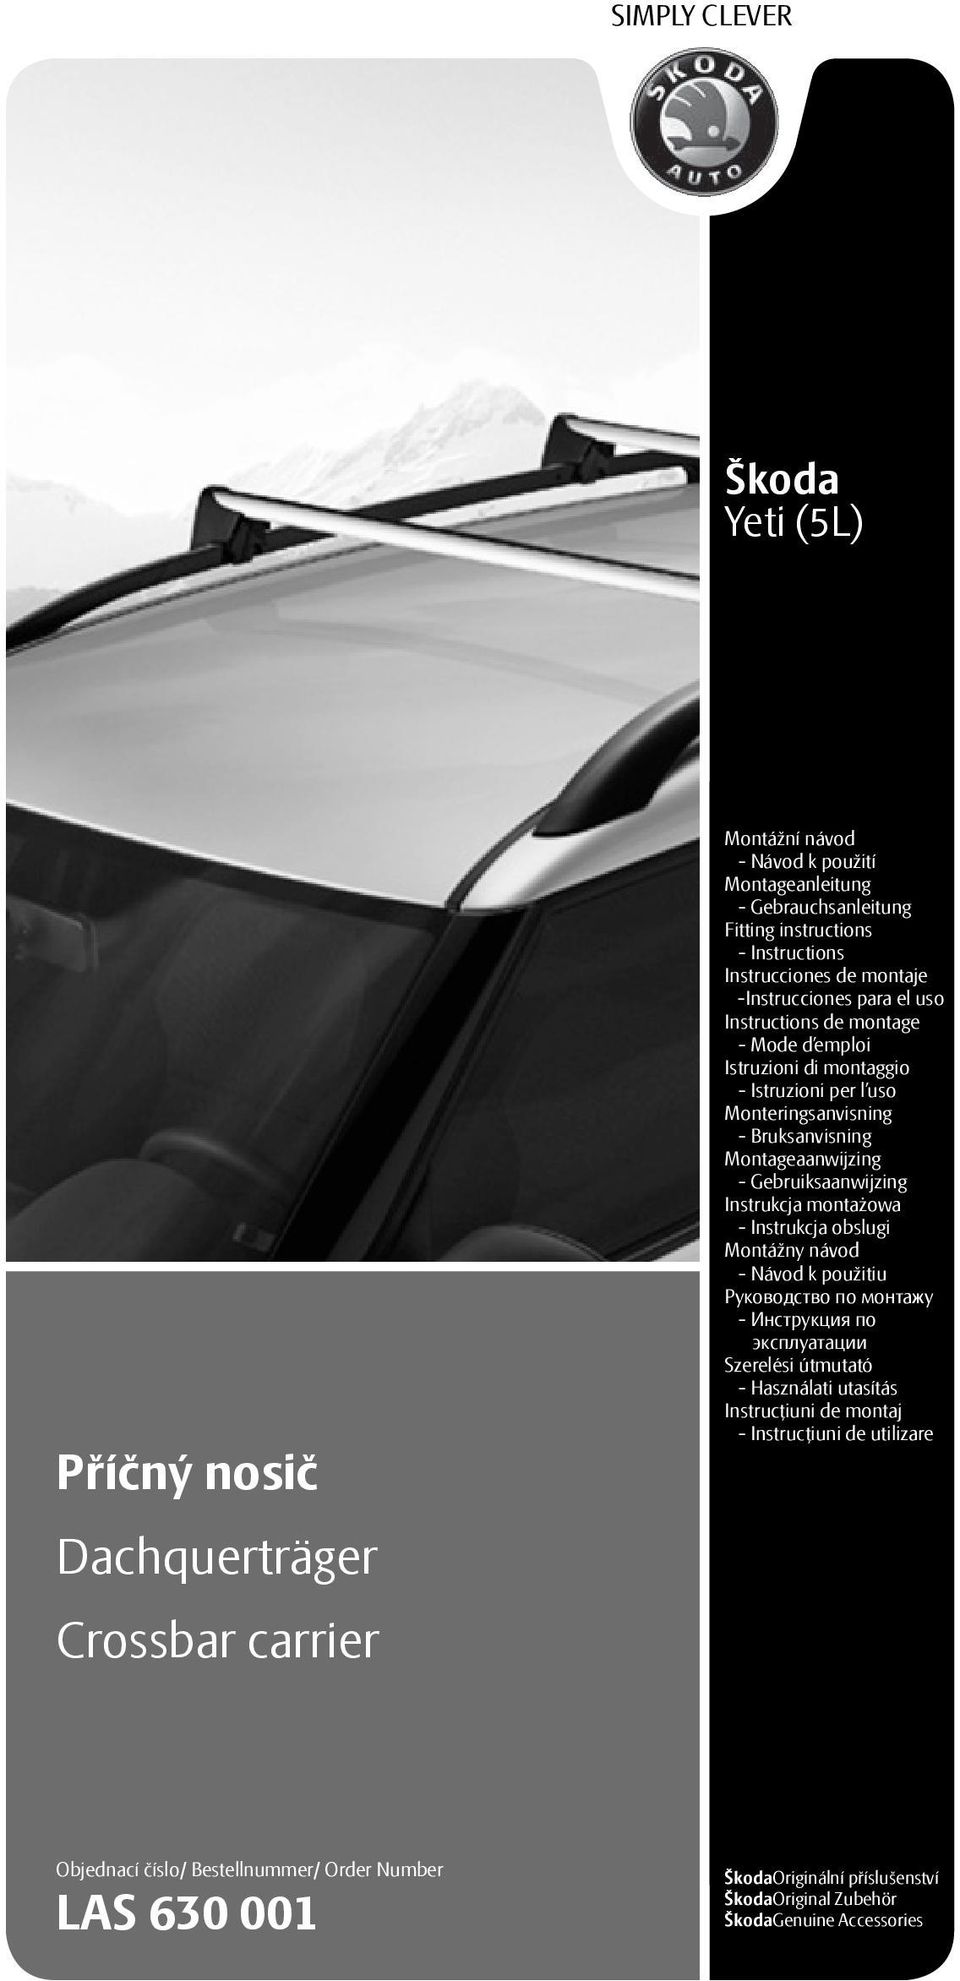 Příčný nosič Dachquerträger Crossbar carrier. Škoda Yeti (5L) SIMPLY CLEVER  - PDF Free Download